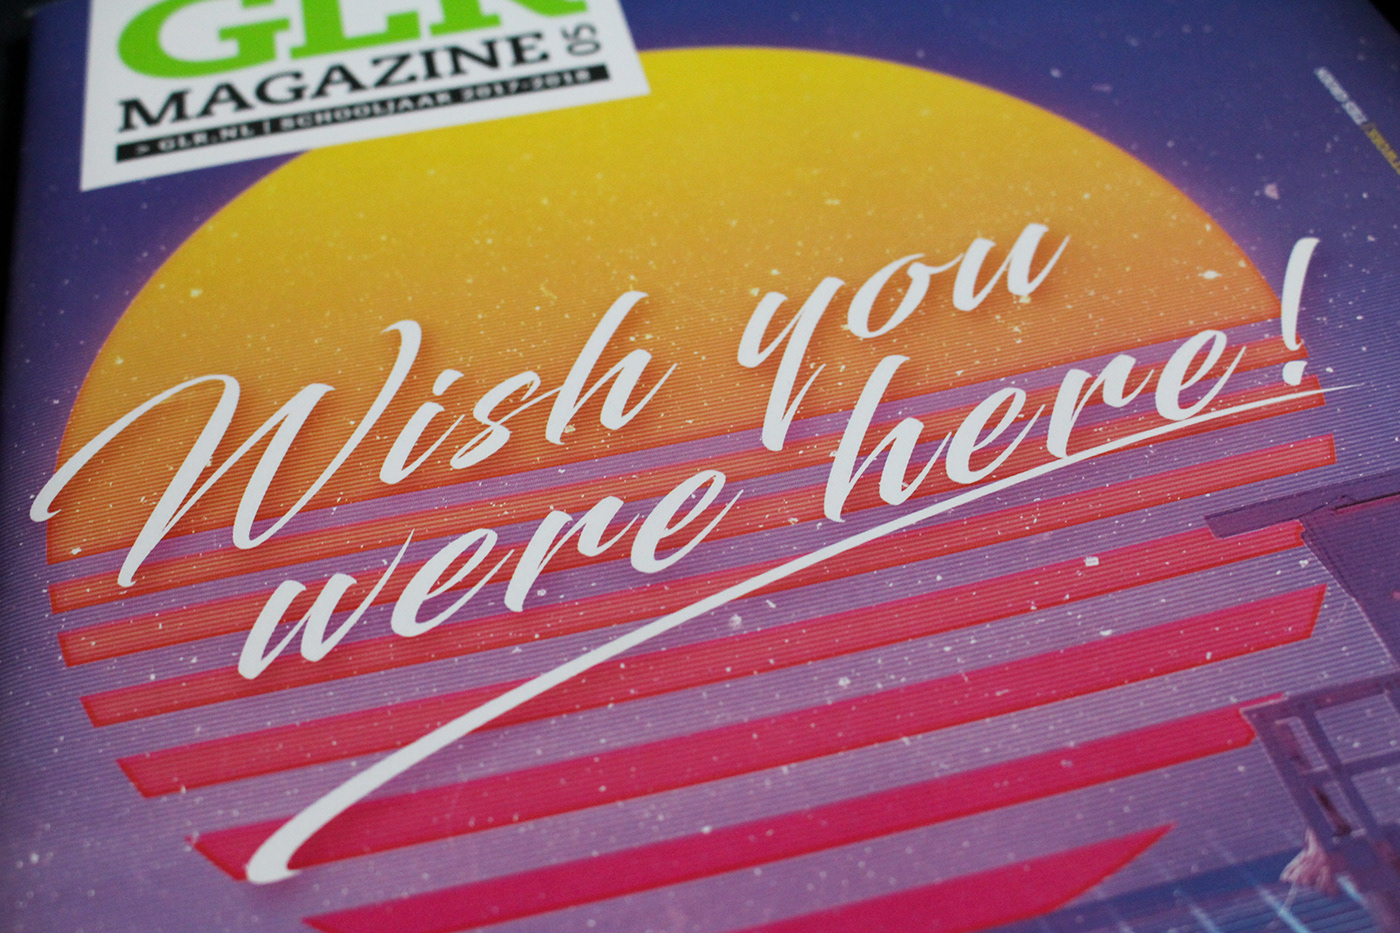 Retro 80s postcard retrowave Synthwave magazine publication design art artist